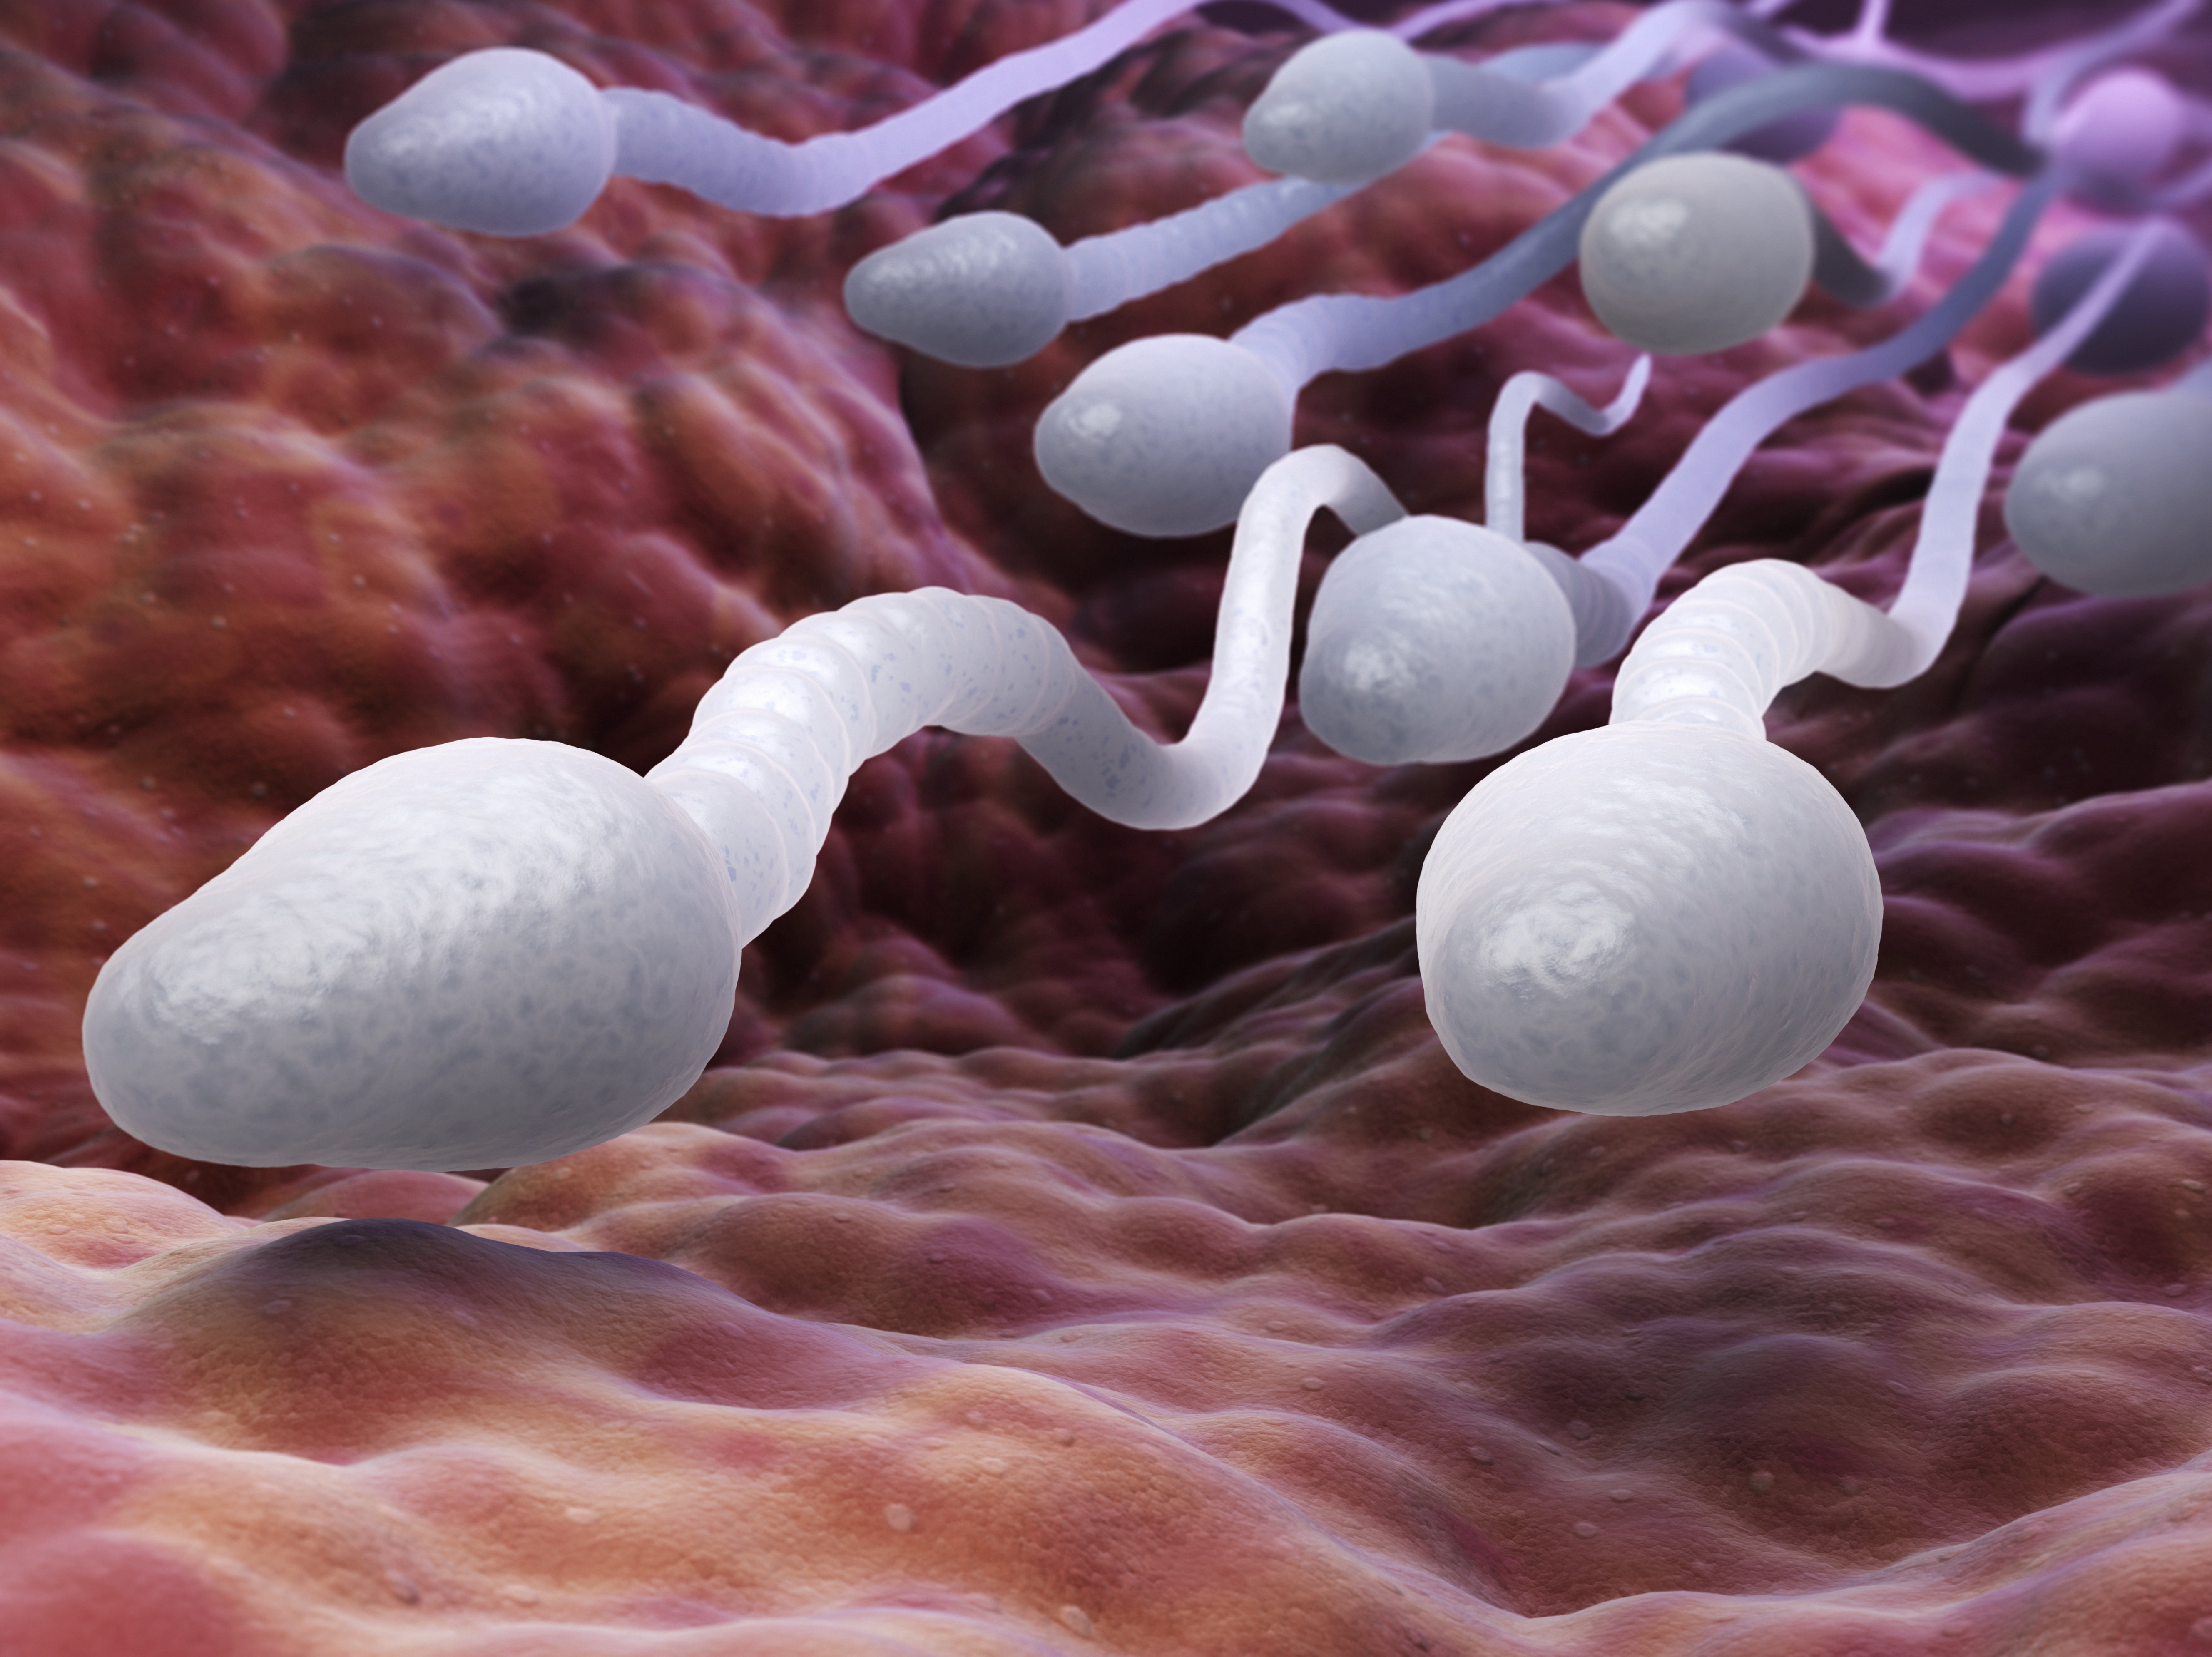 Male sperm cells